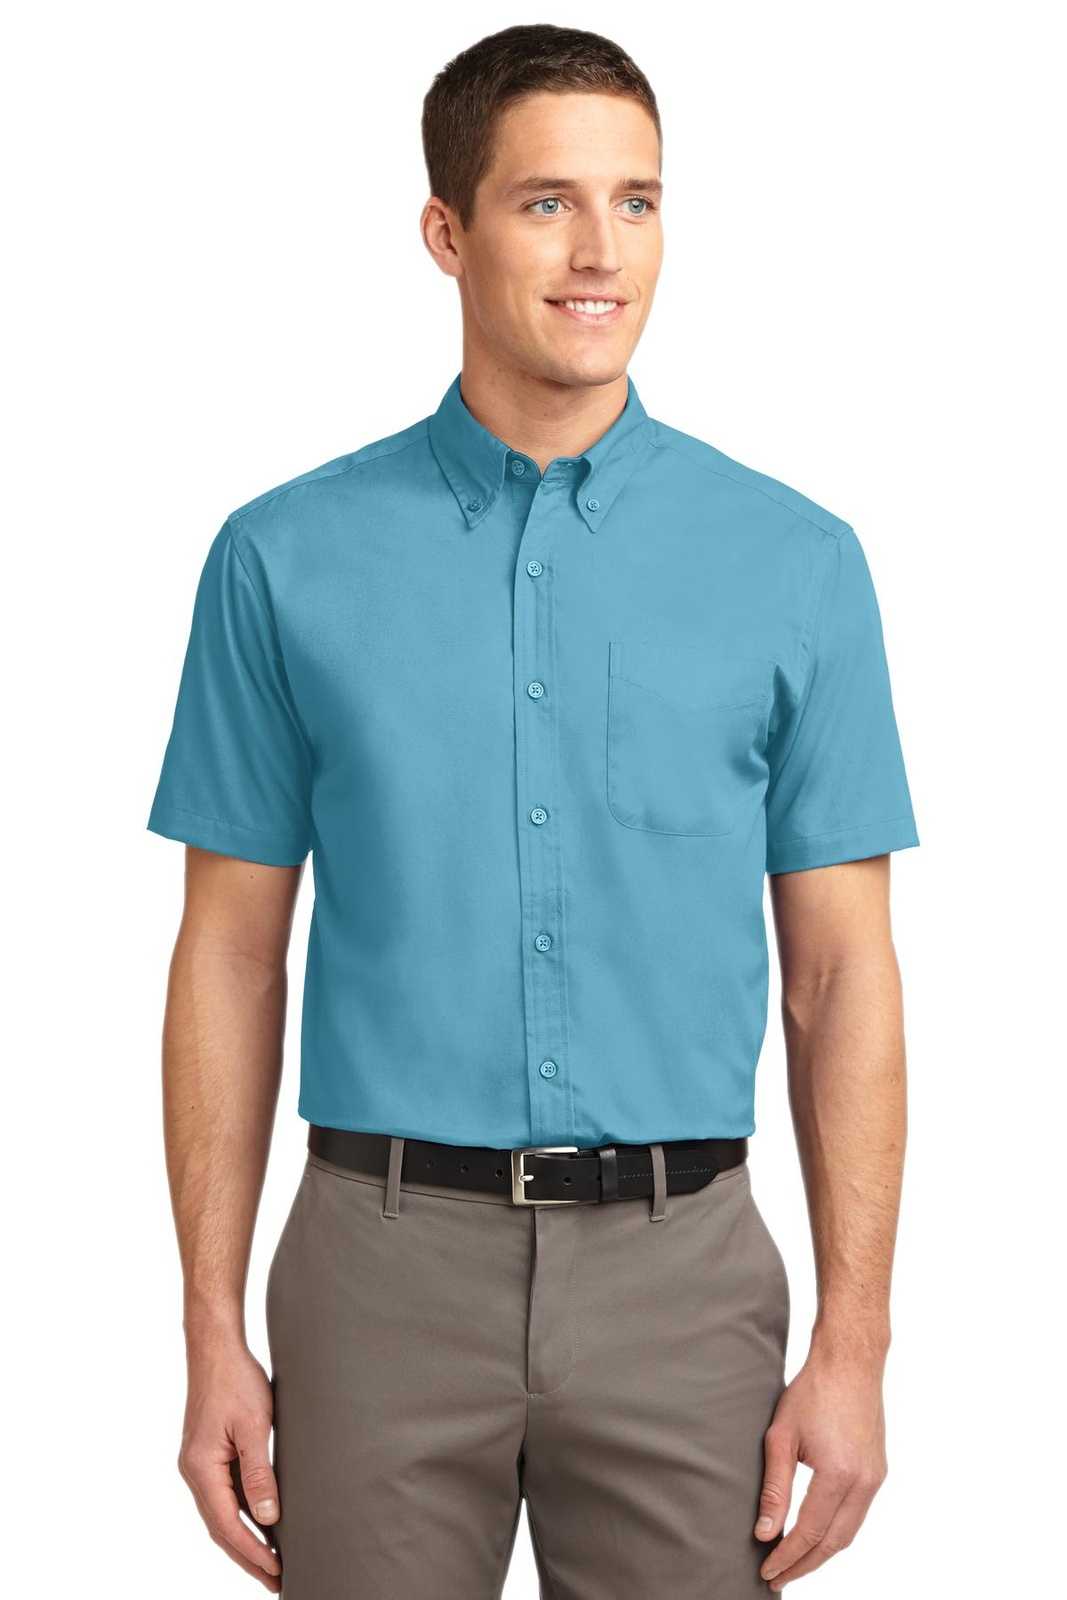 Port Authority S508 Short Sleeve Easy Care Shirt - Maui Blue - HIT a Double - 1